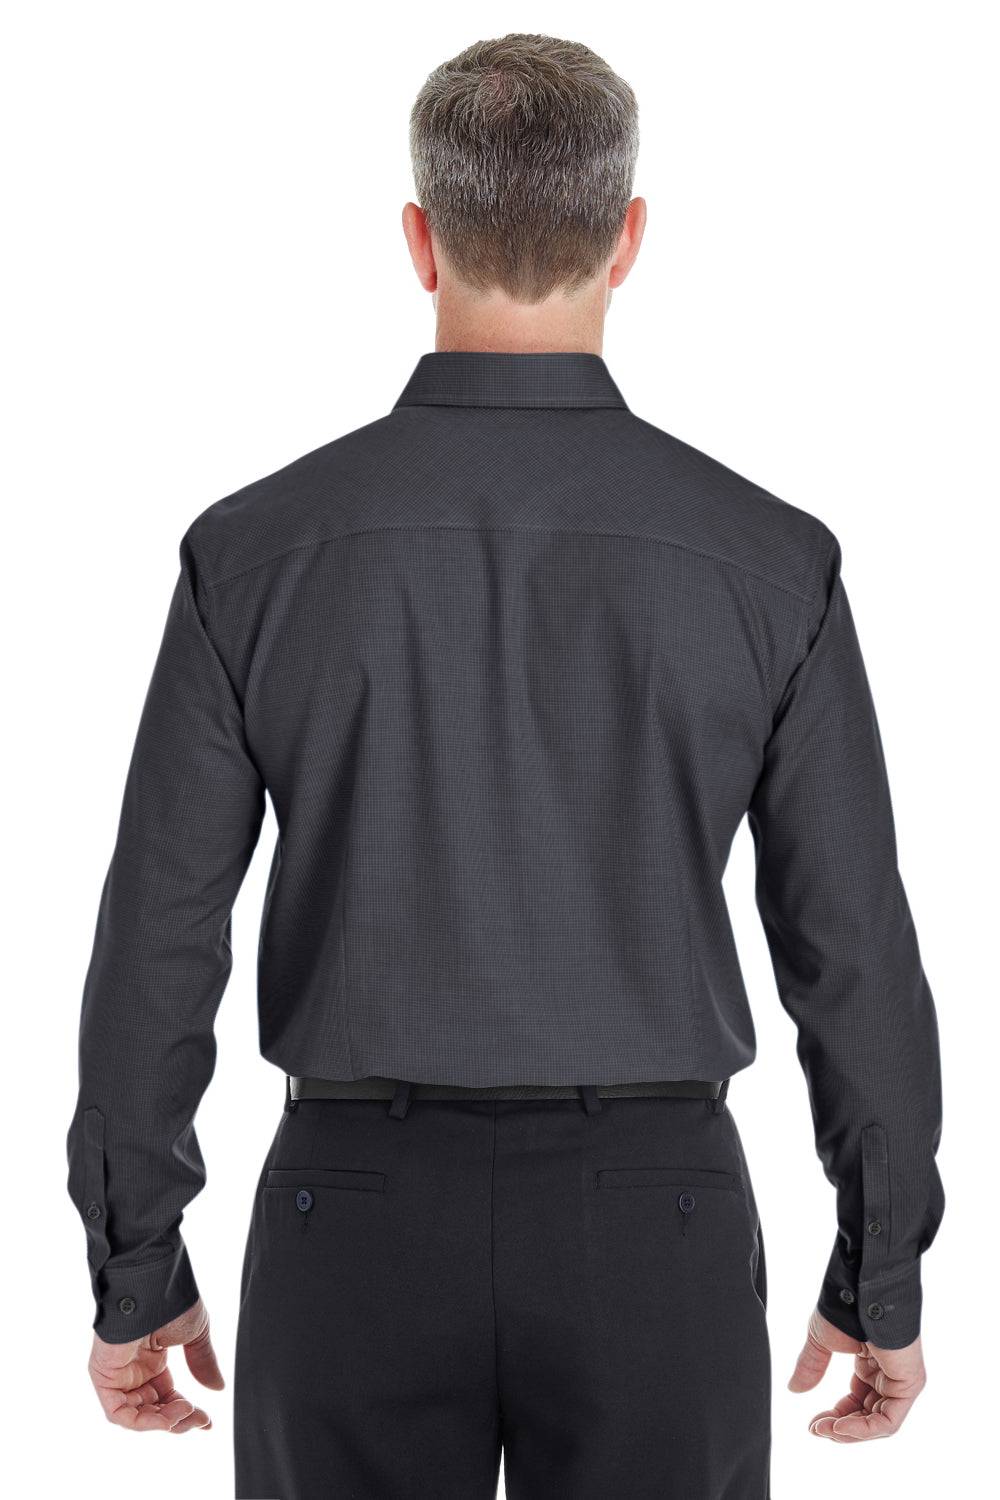 Devon & Jones DG532 Mens Crown Woven Collection Wrinkle Resistant Long Sleeve Button Down Shirt Black Back